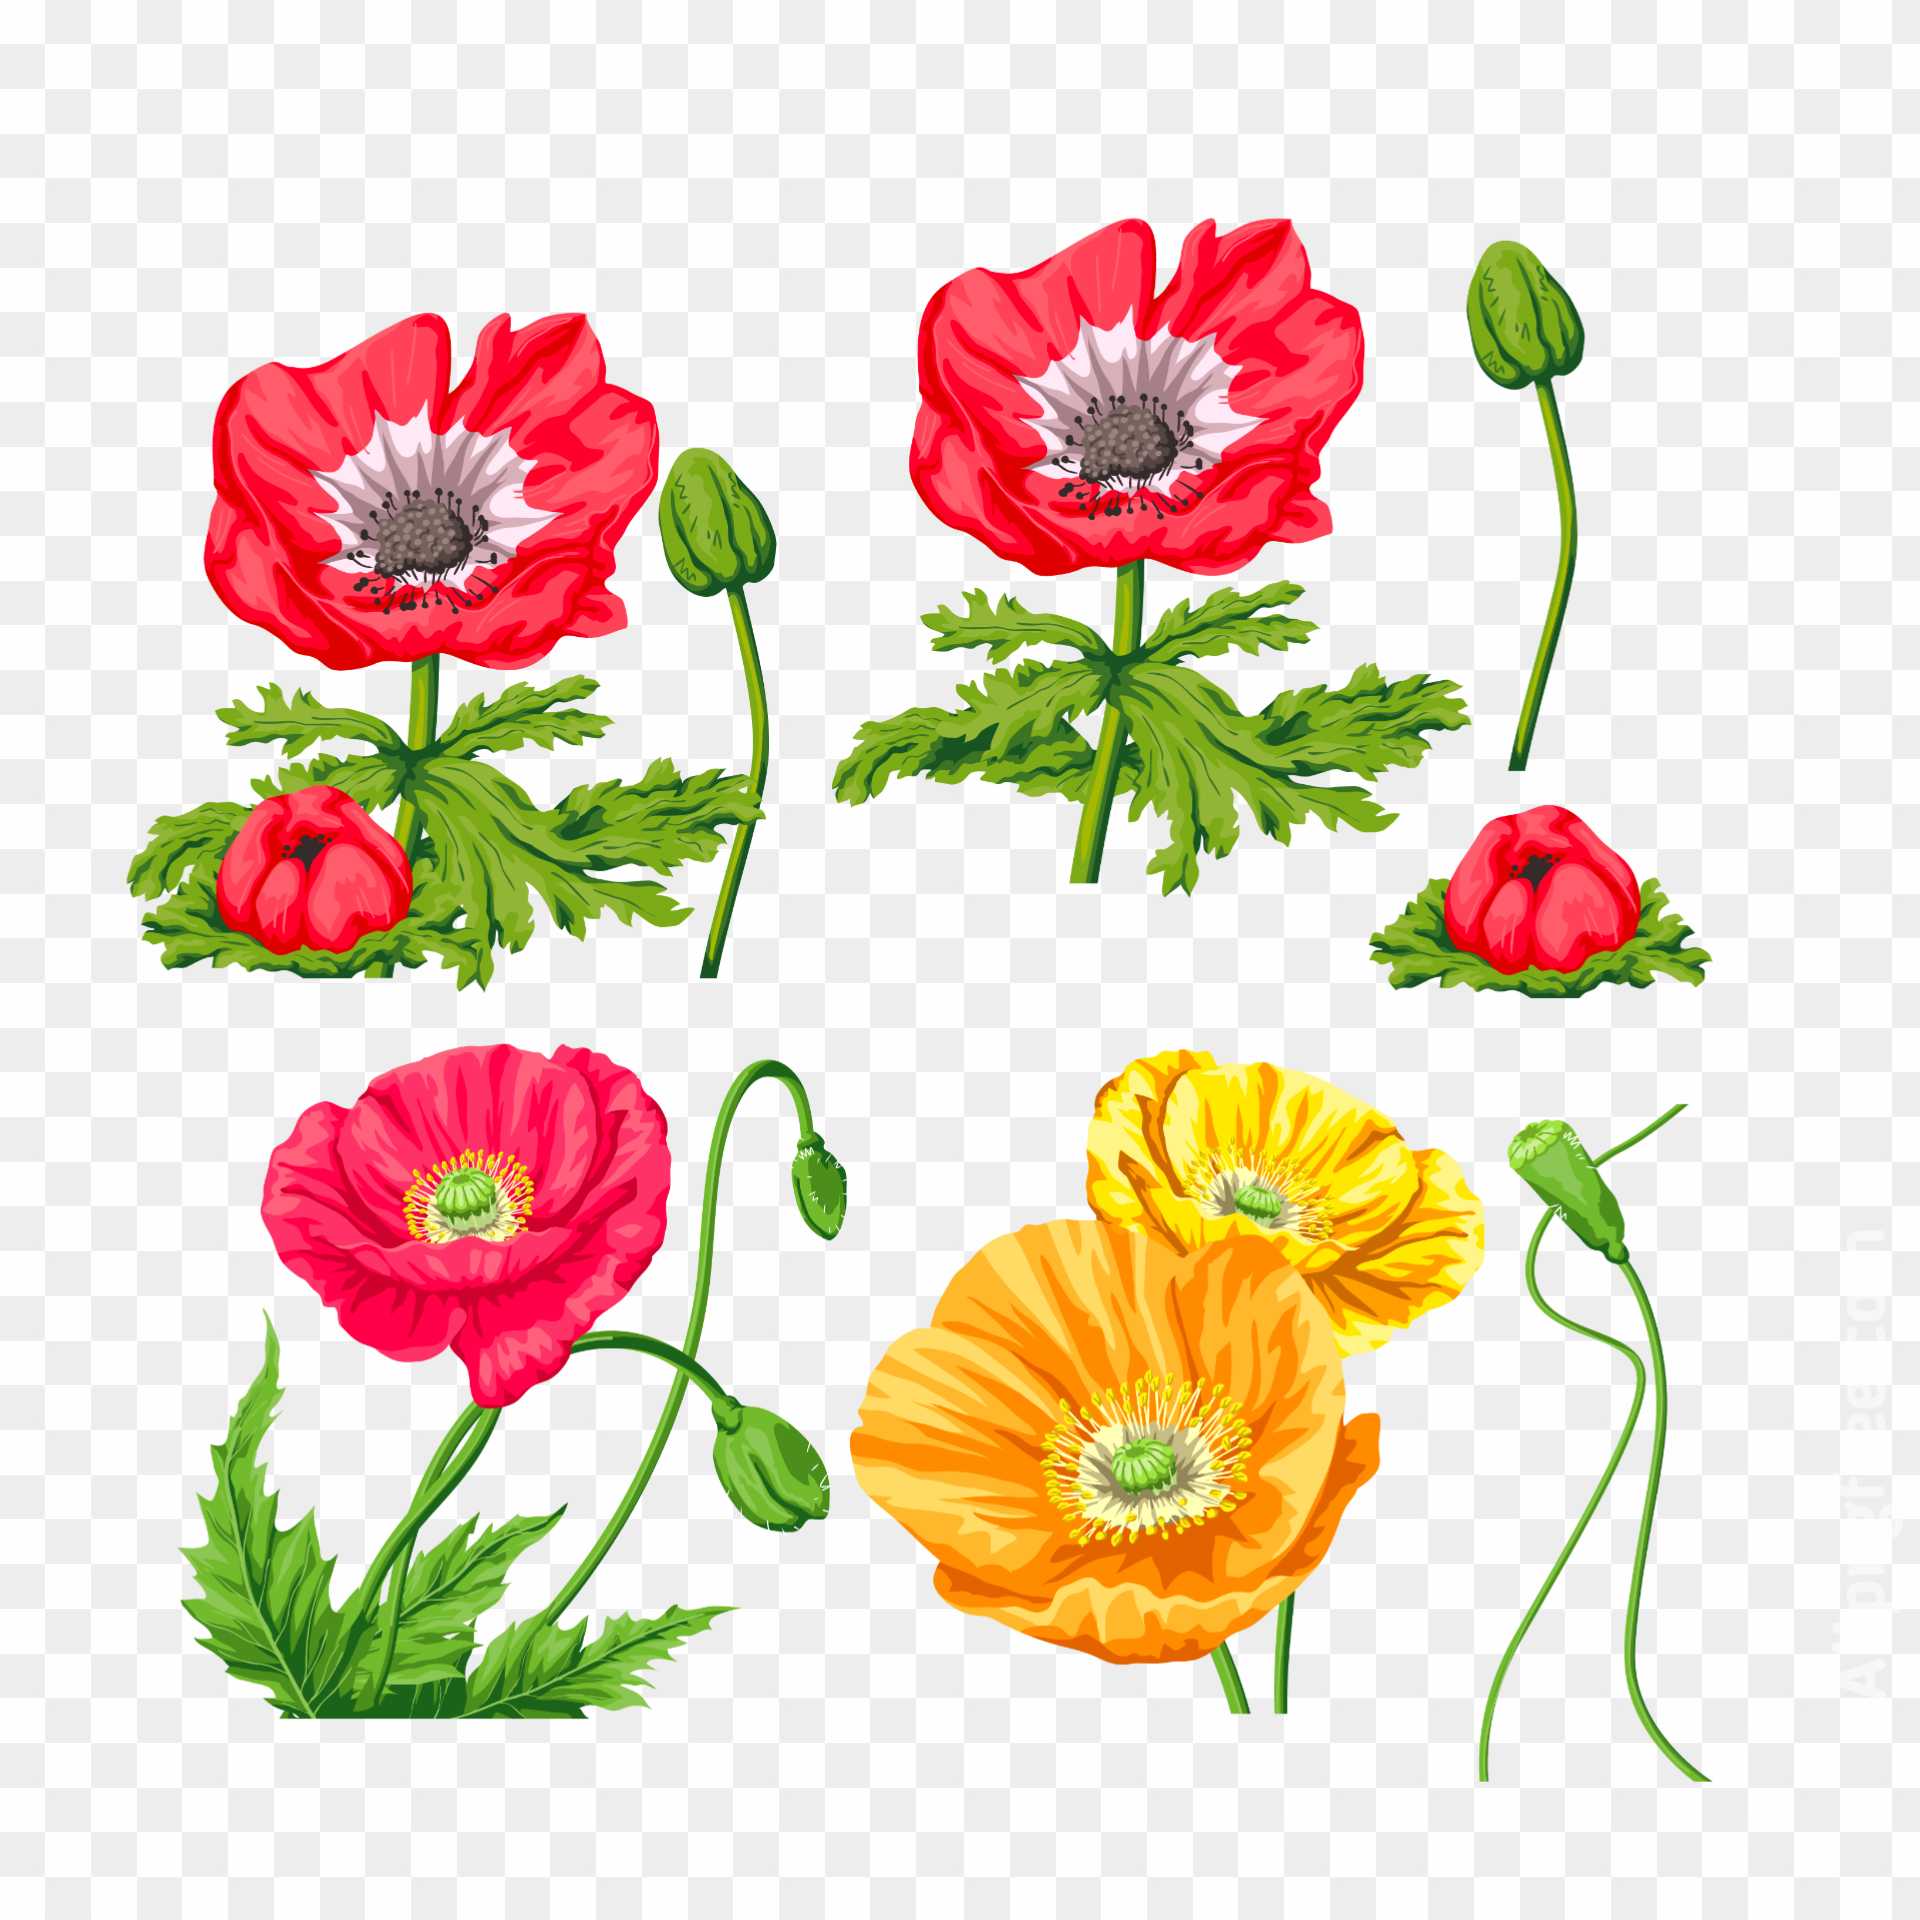 Flower png images